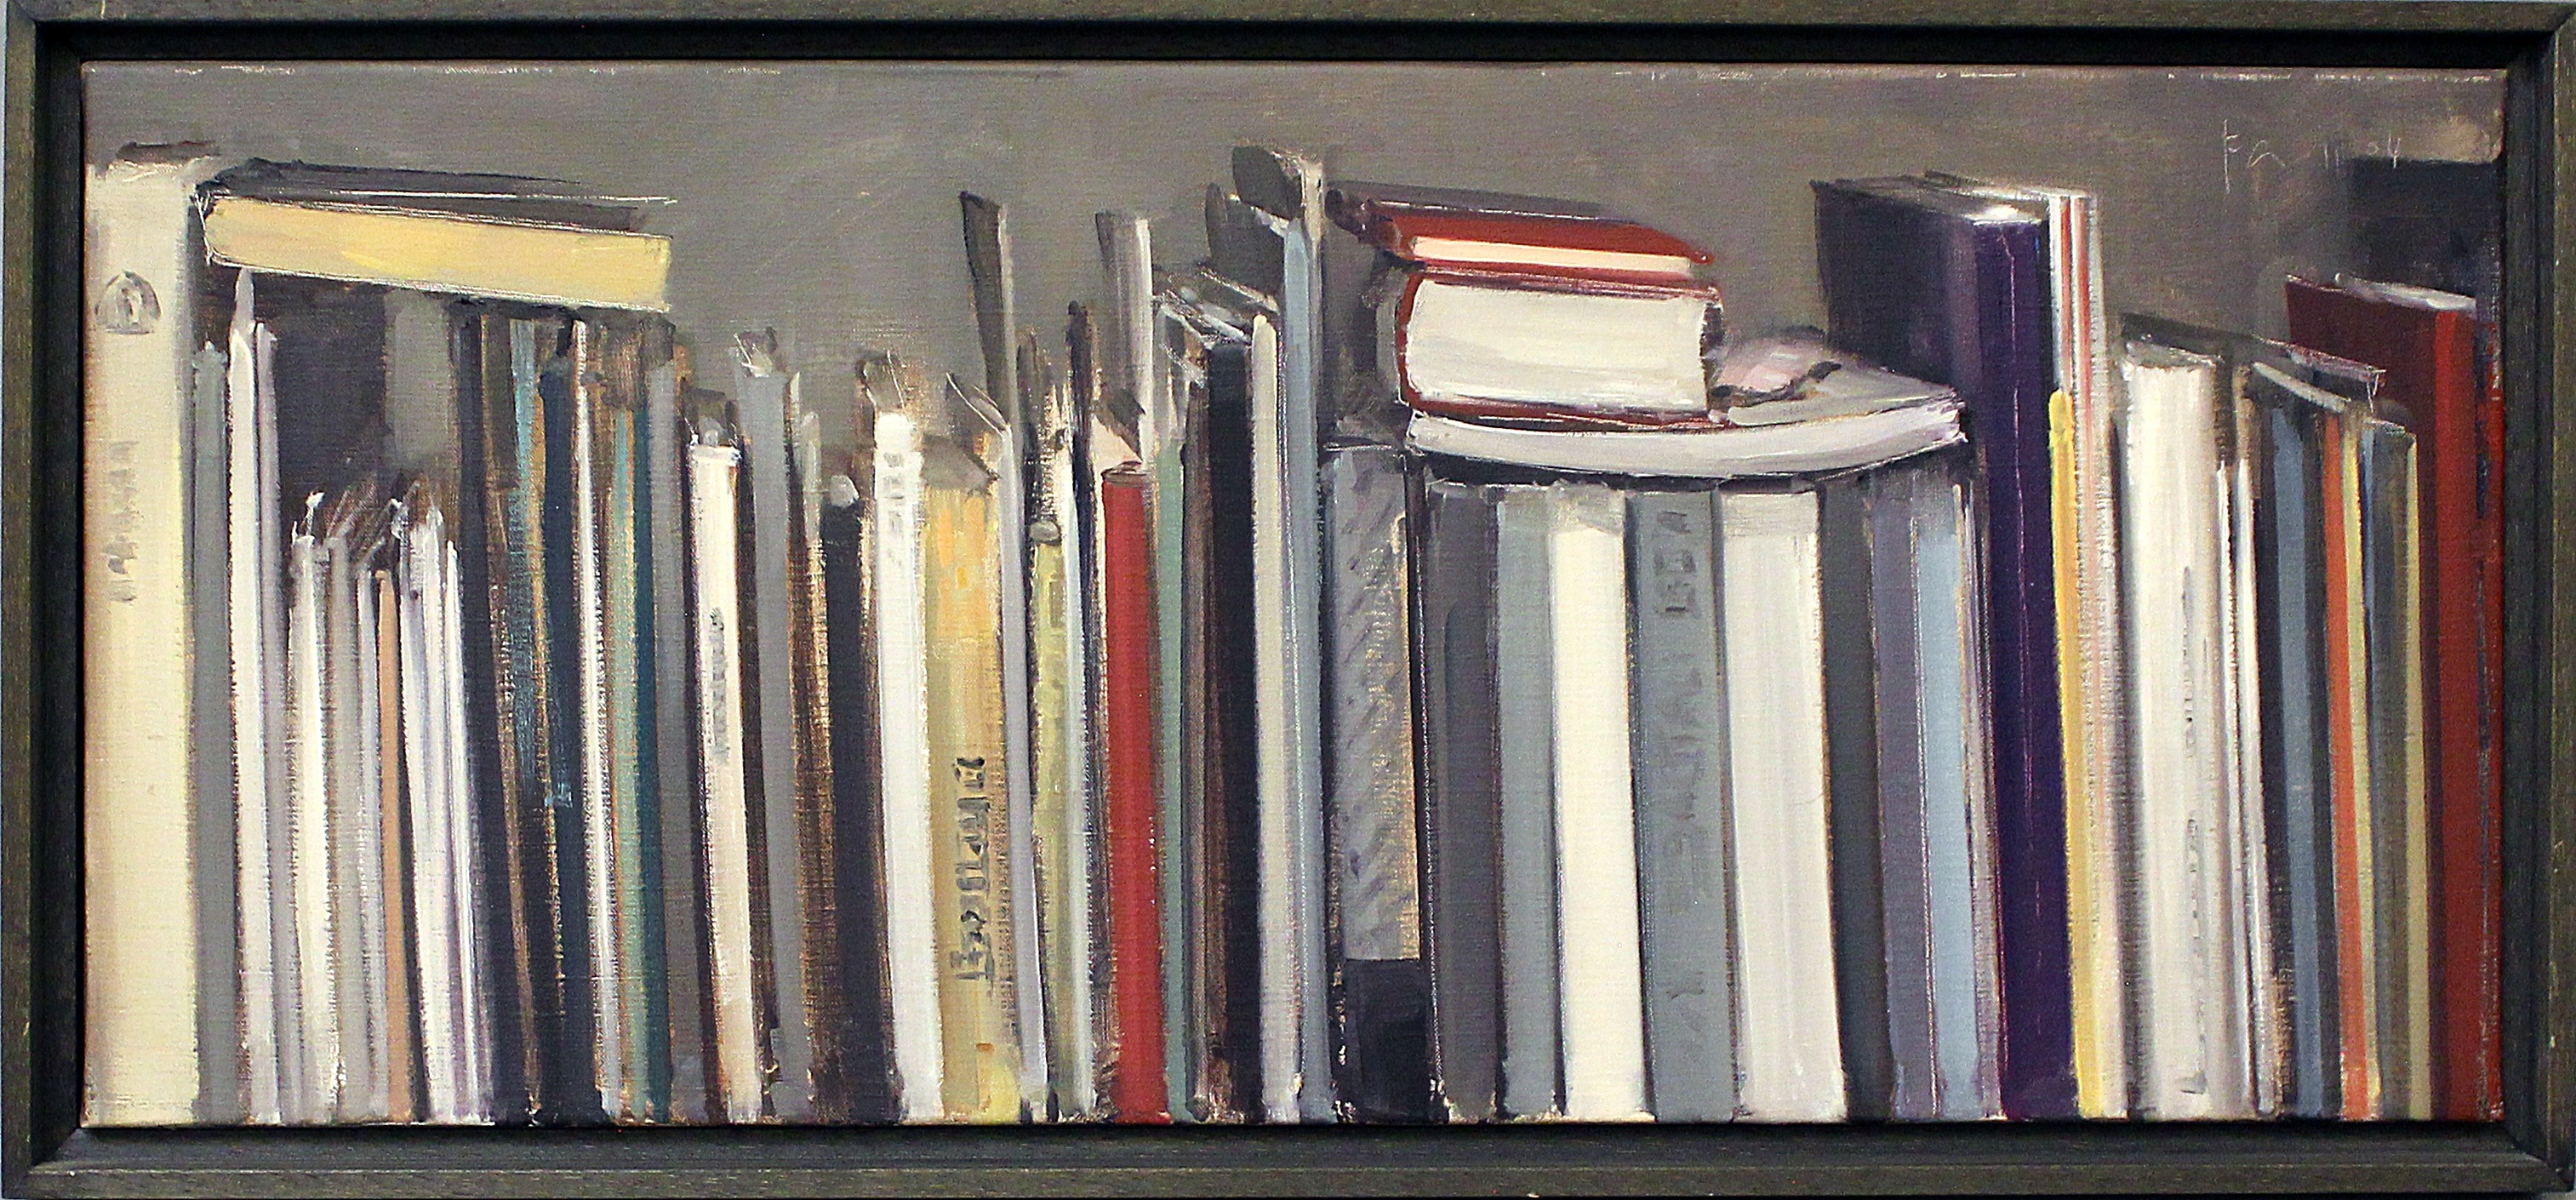 Bücher by Friedel Anderson, 2004